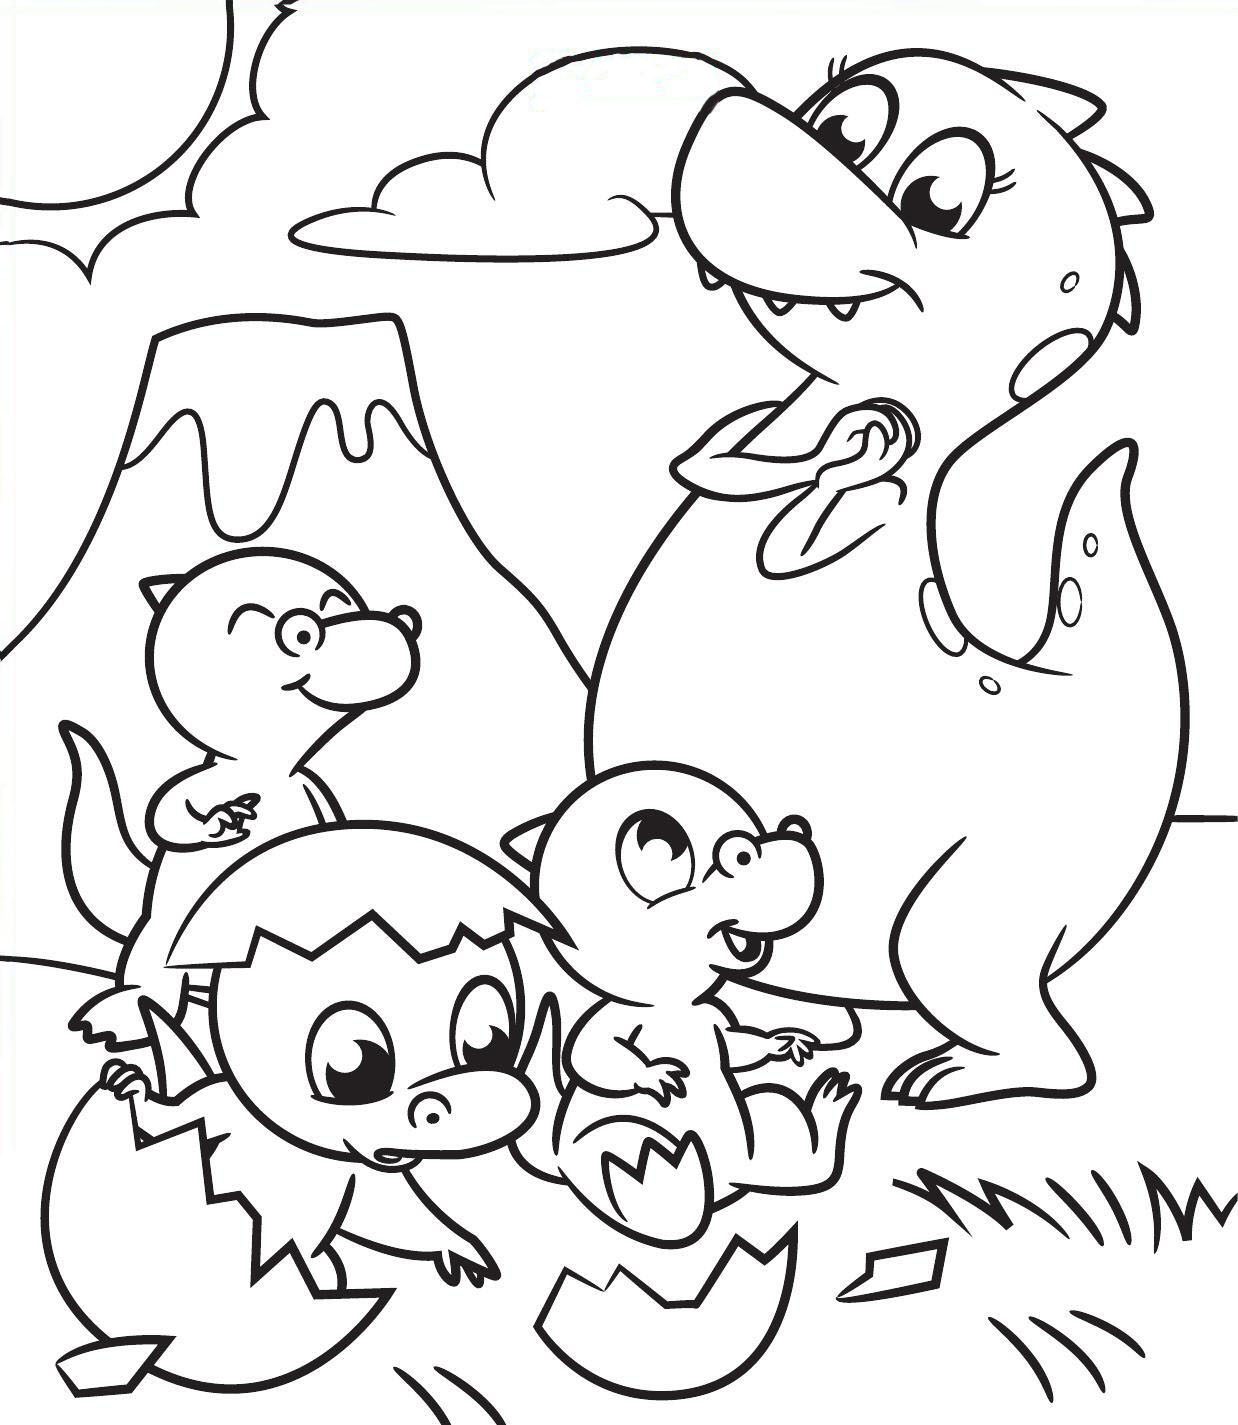 Dinosaur Family Updated